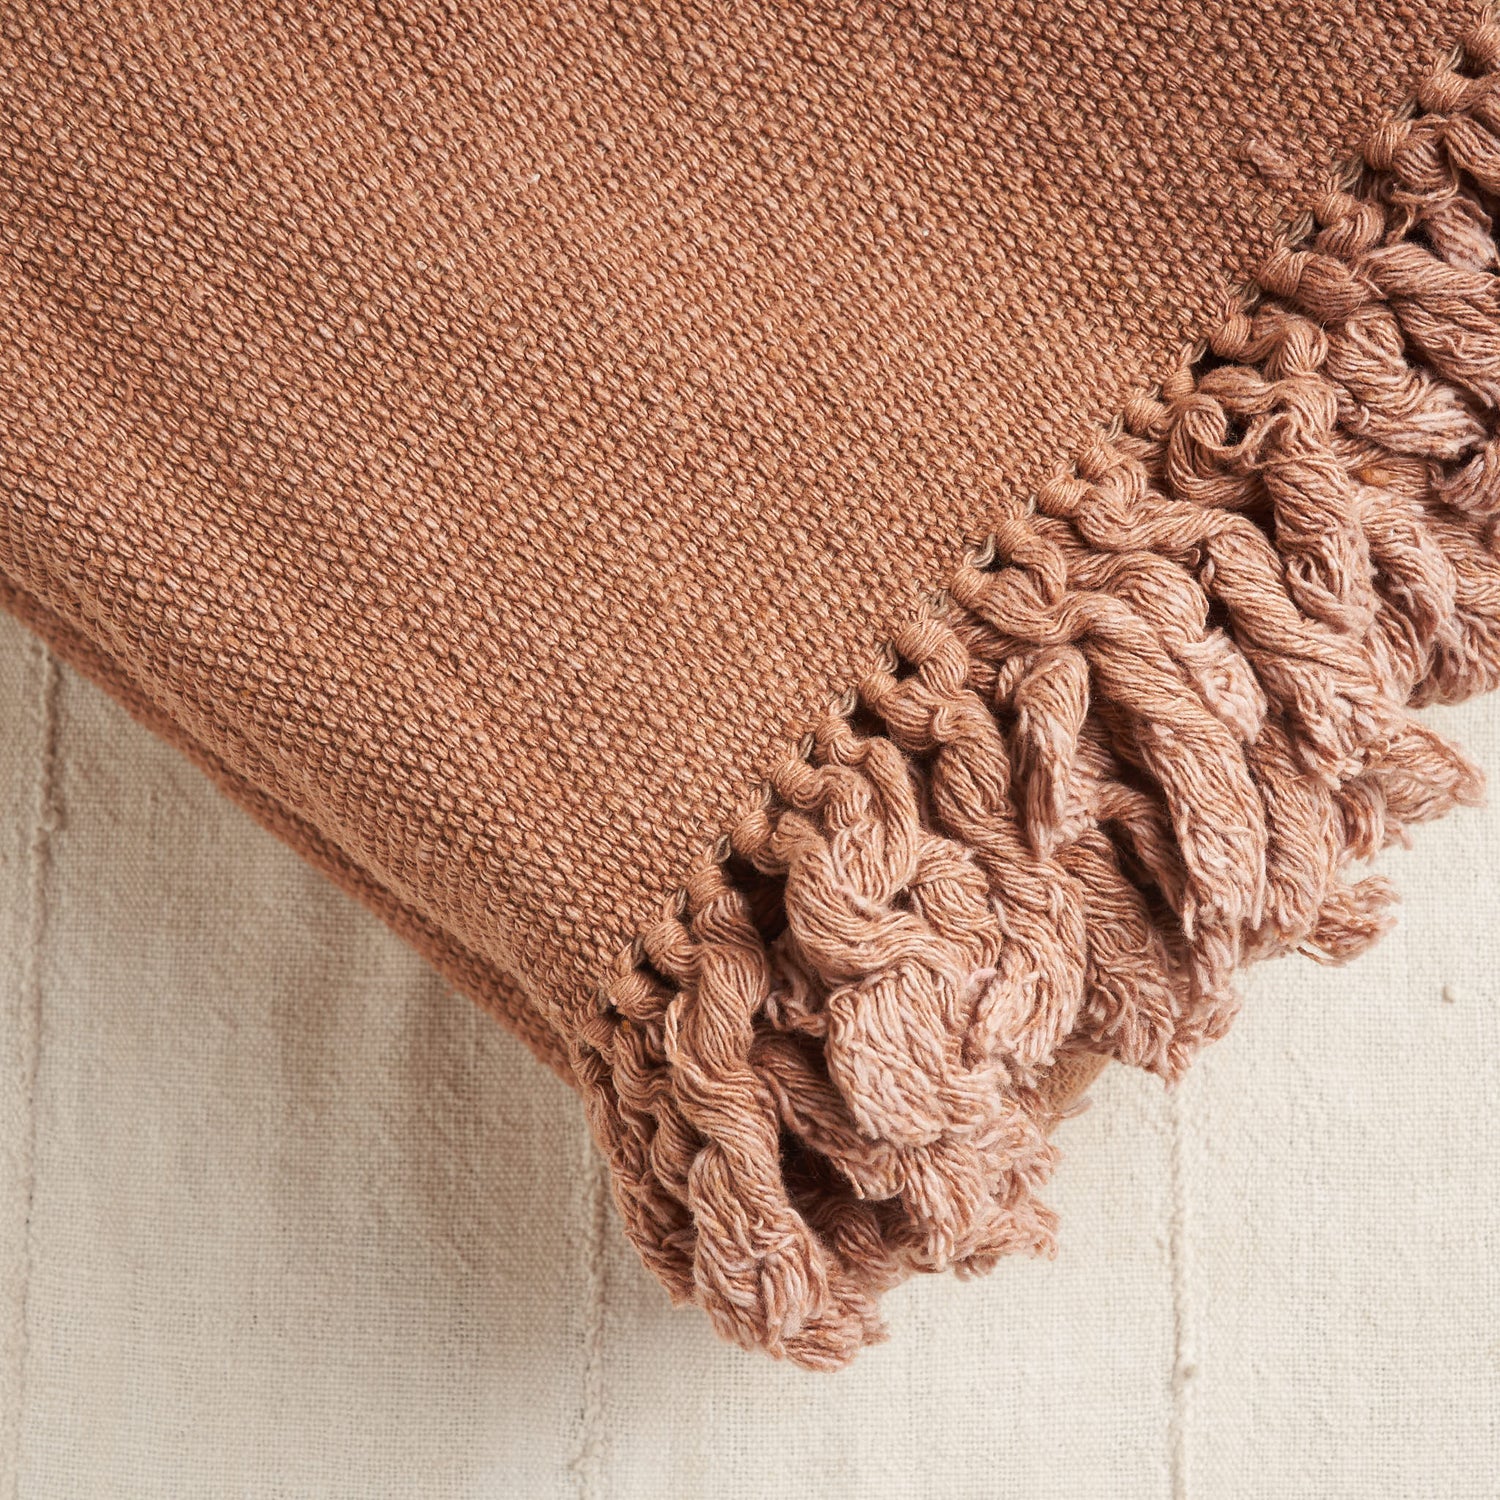 Handwoven Organic Cotton Throw Blanket, Undyed Wood